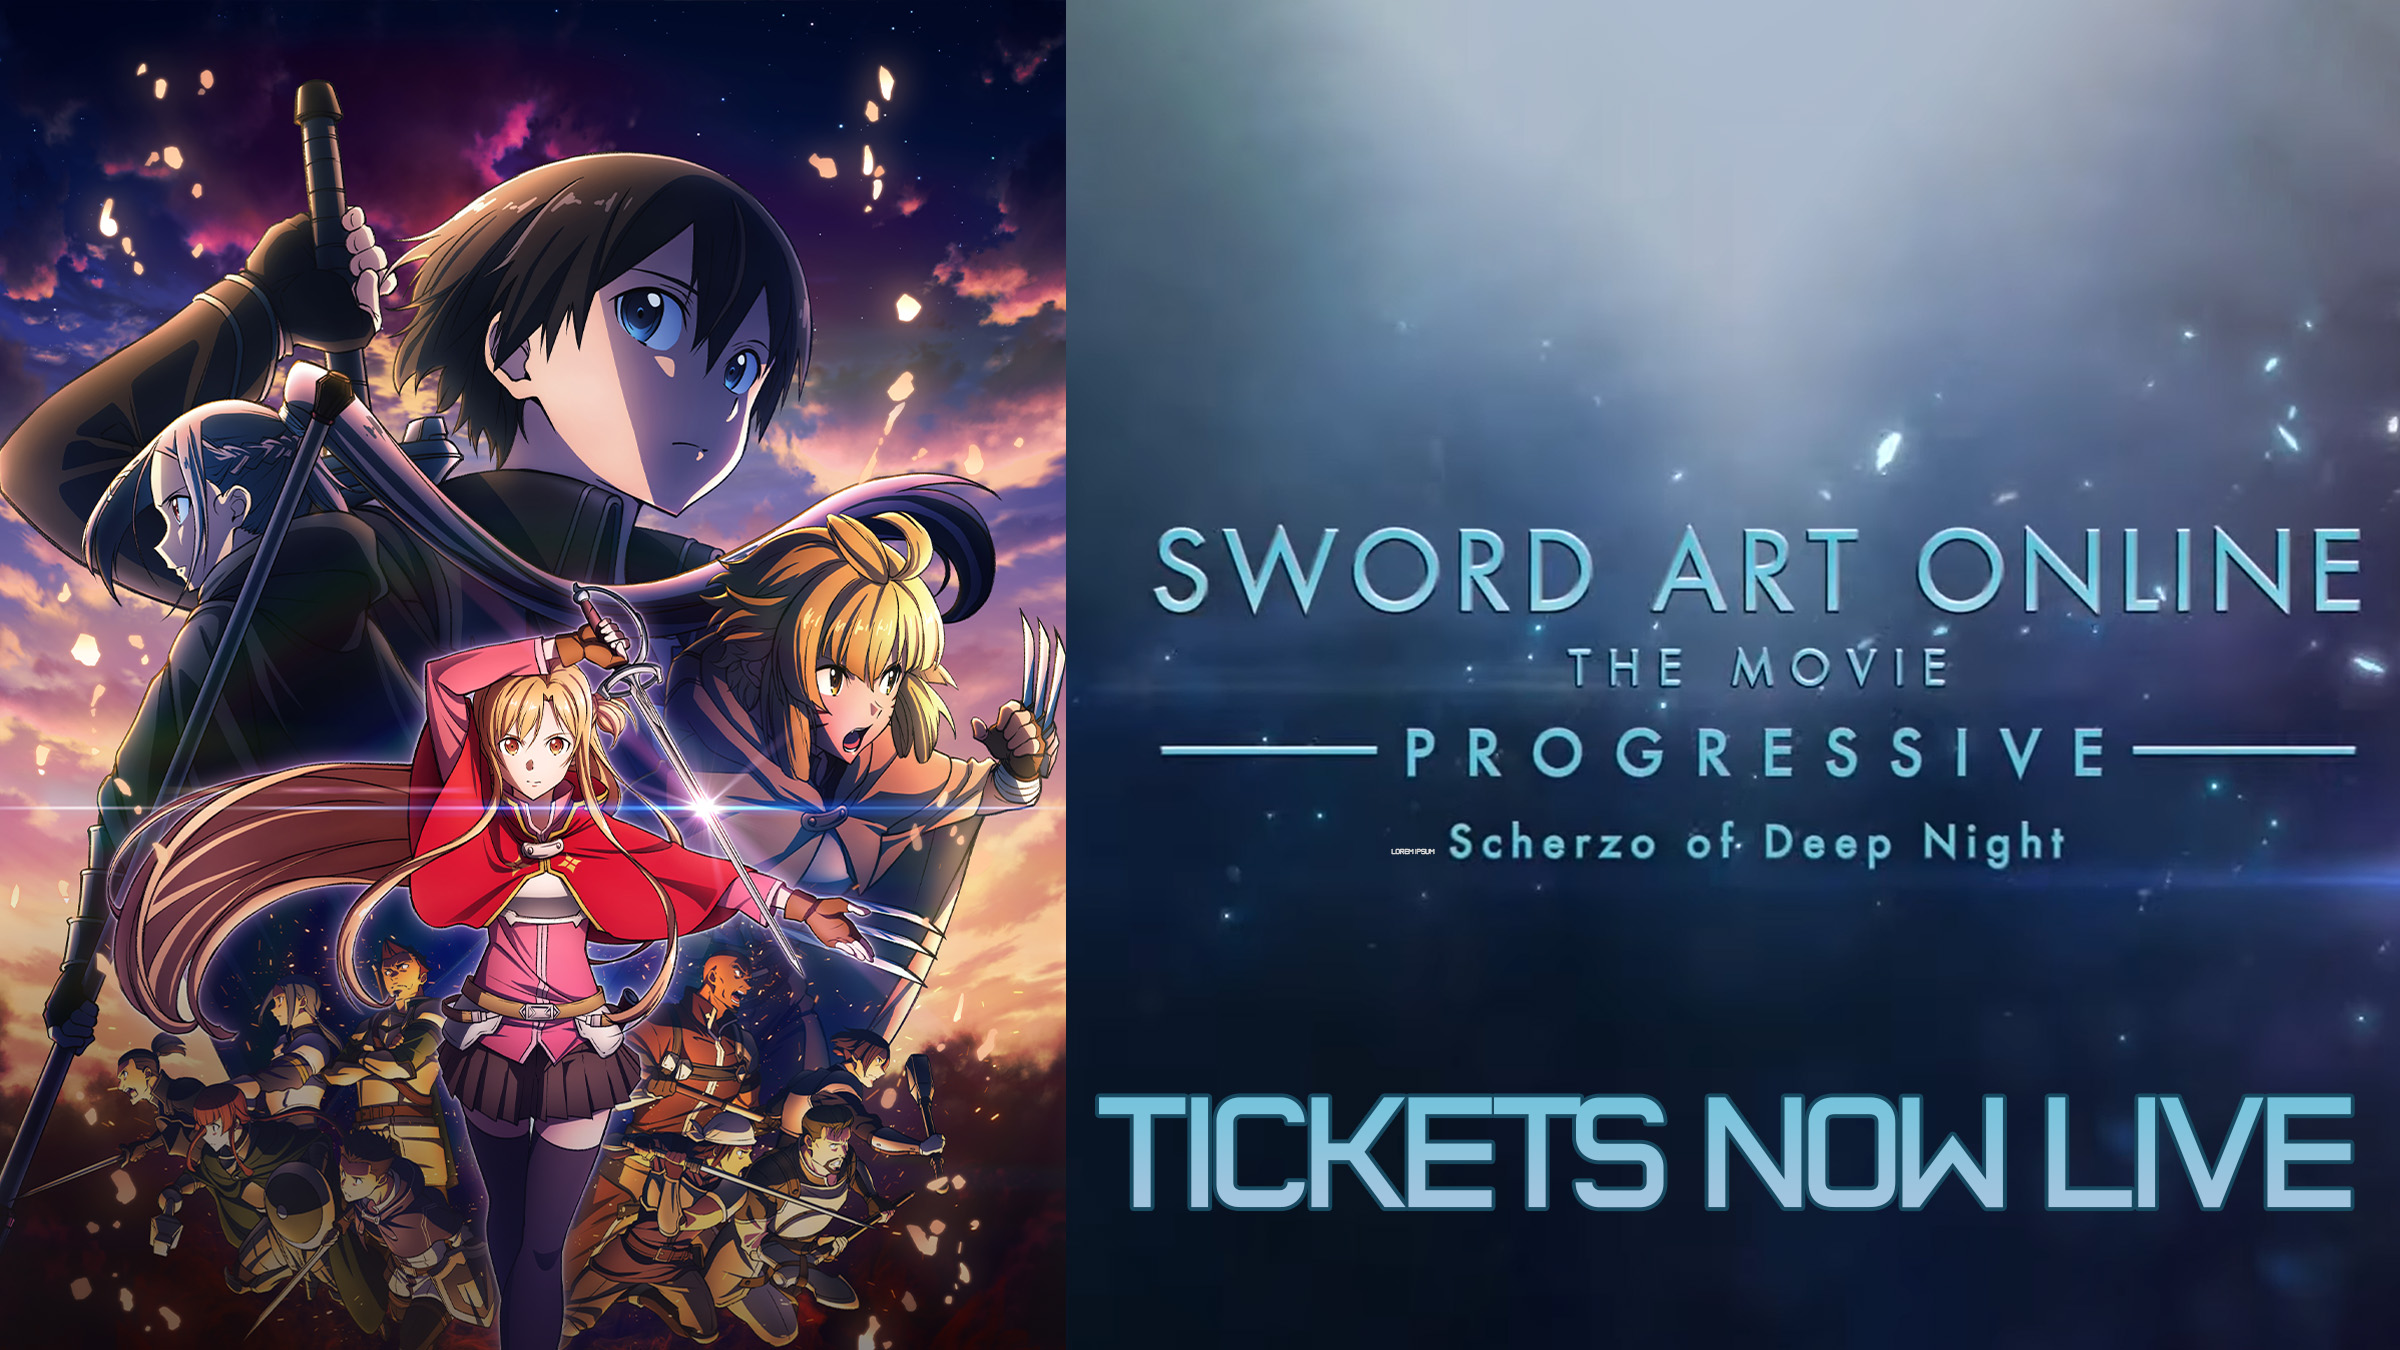 Crunchyroll Announces Sword Art Online The Movie Tickets on Sale